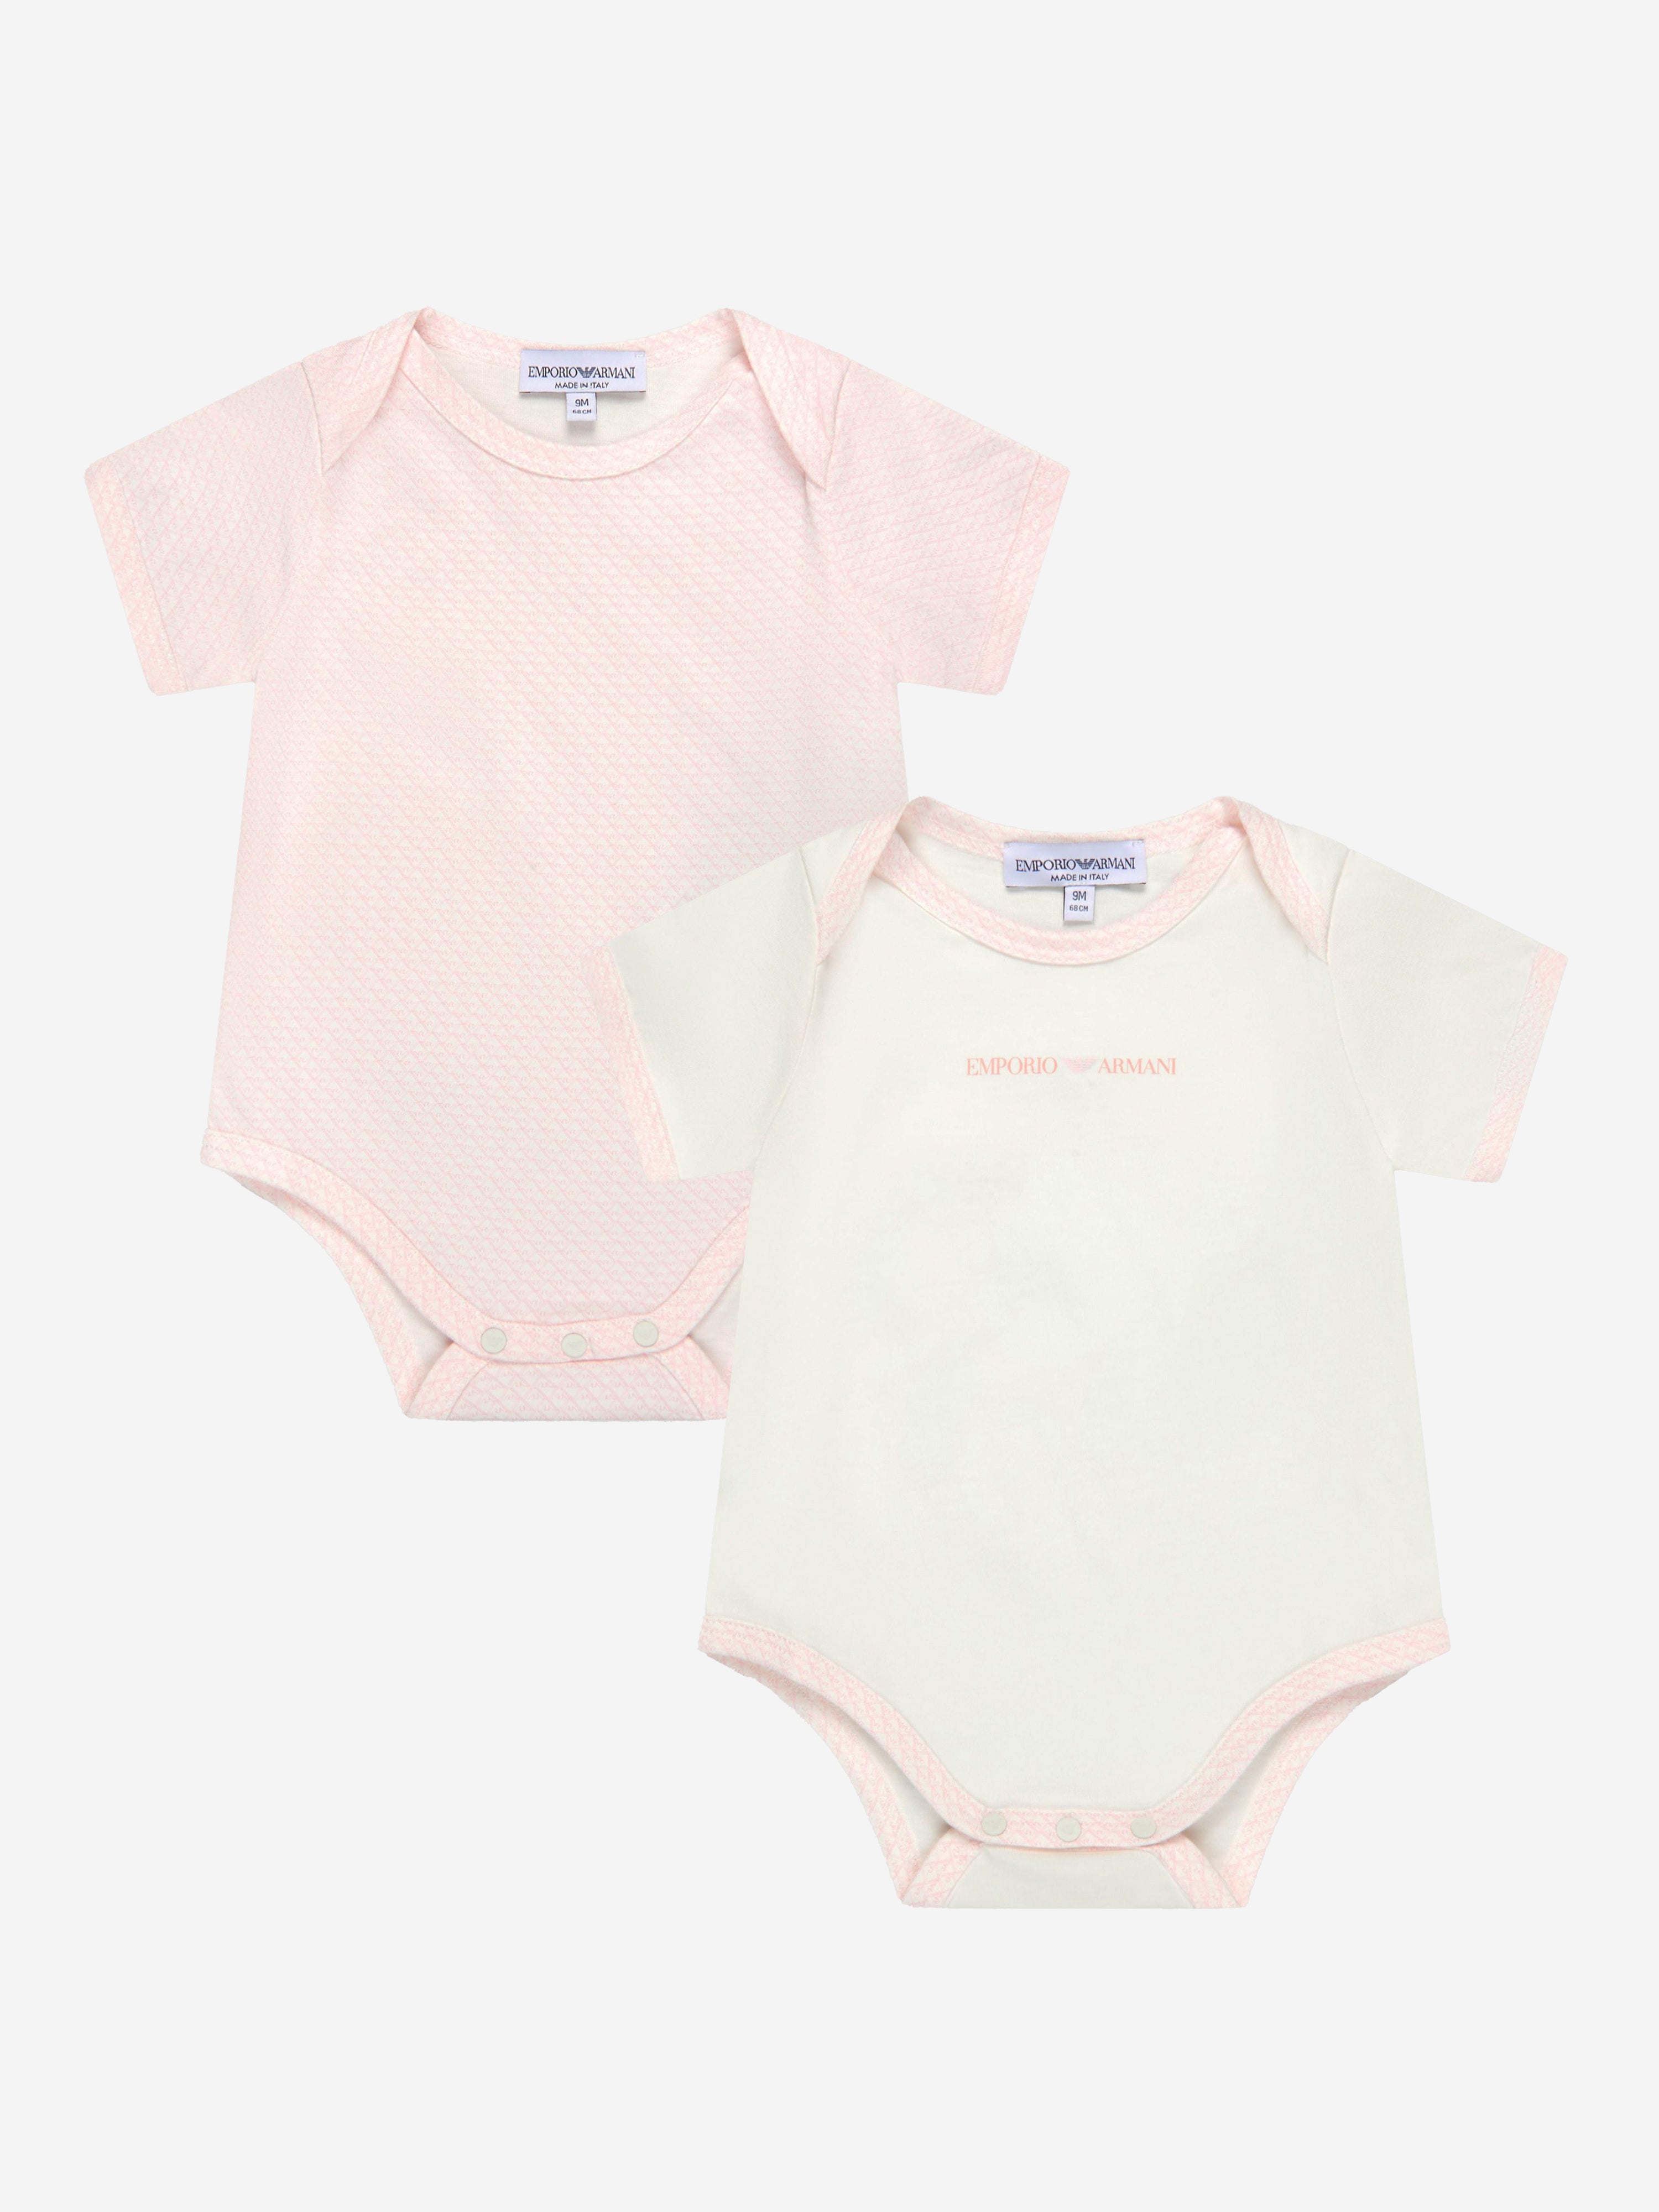 stil Kanon Opwekking Emporio Armani Baby Girls Bodysuit Set | Childsplay Clothing